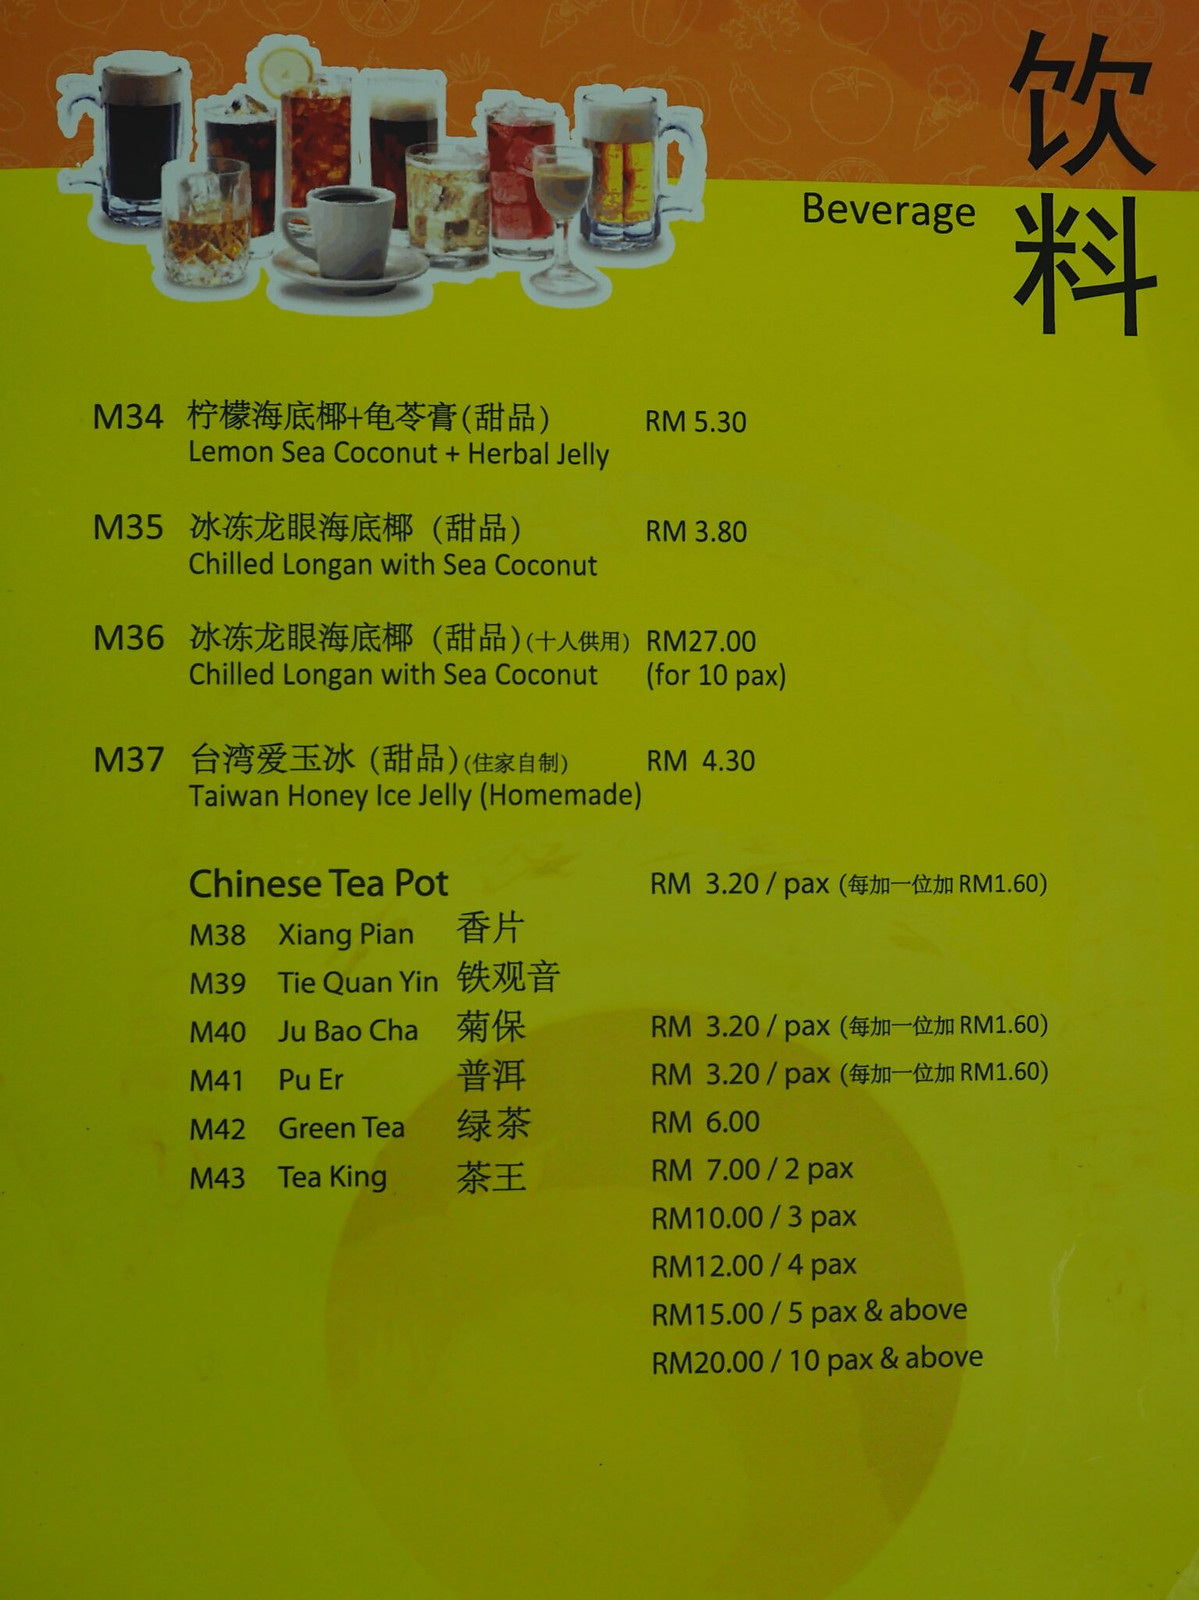 Beverages menu